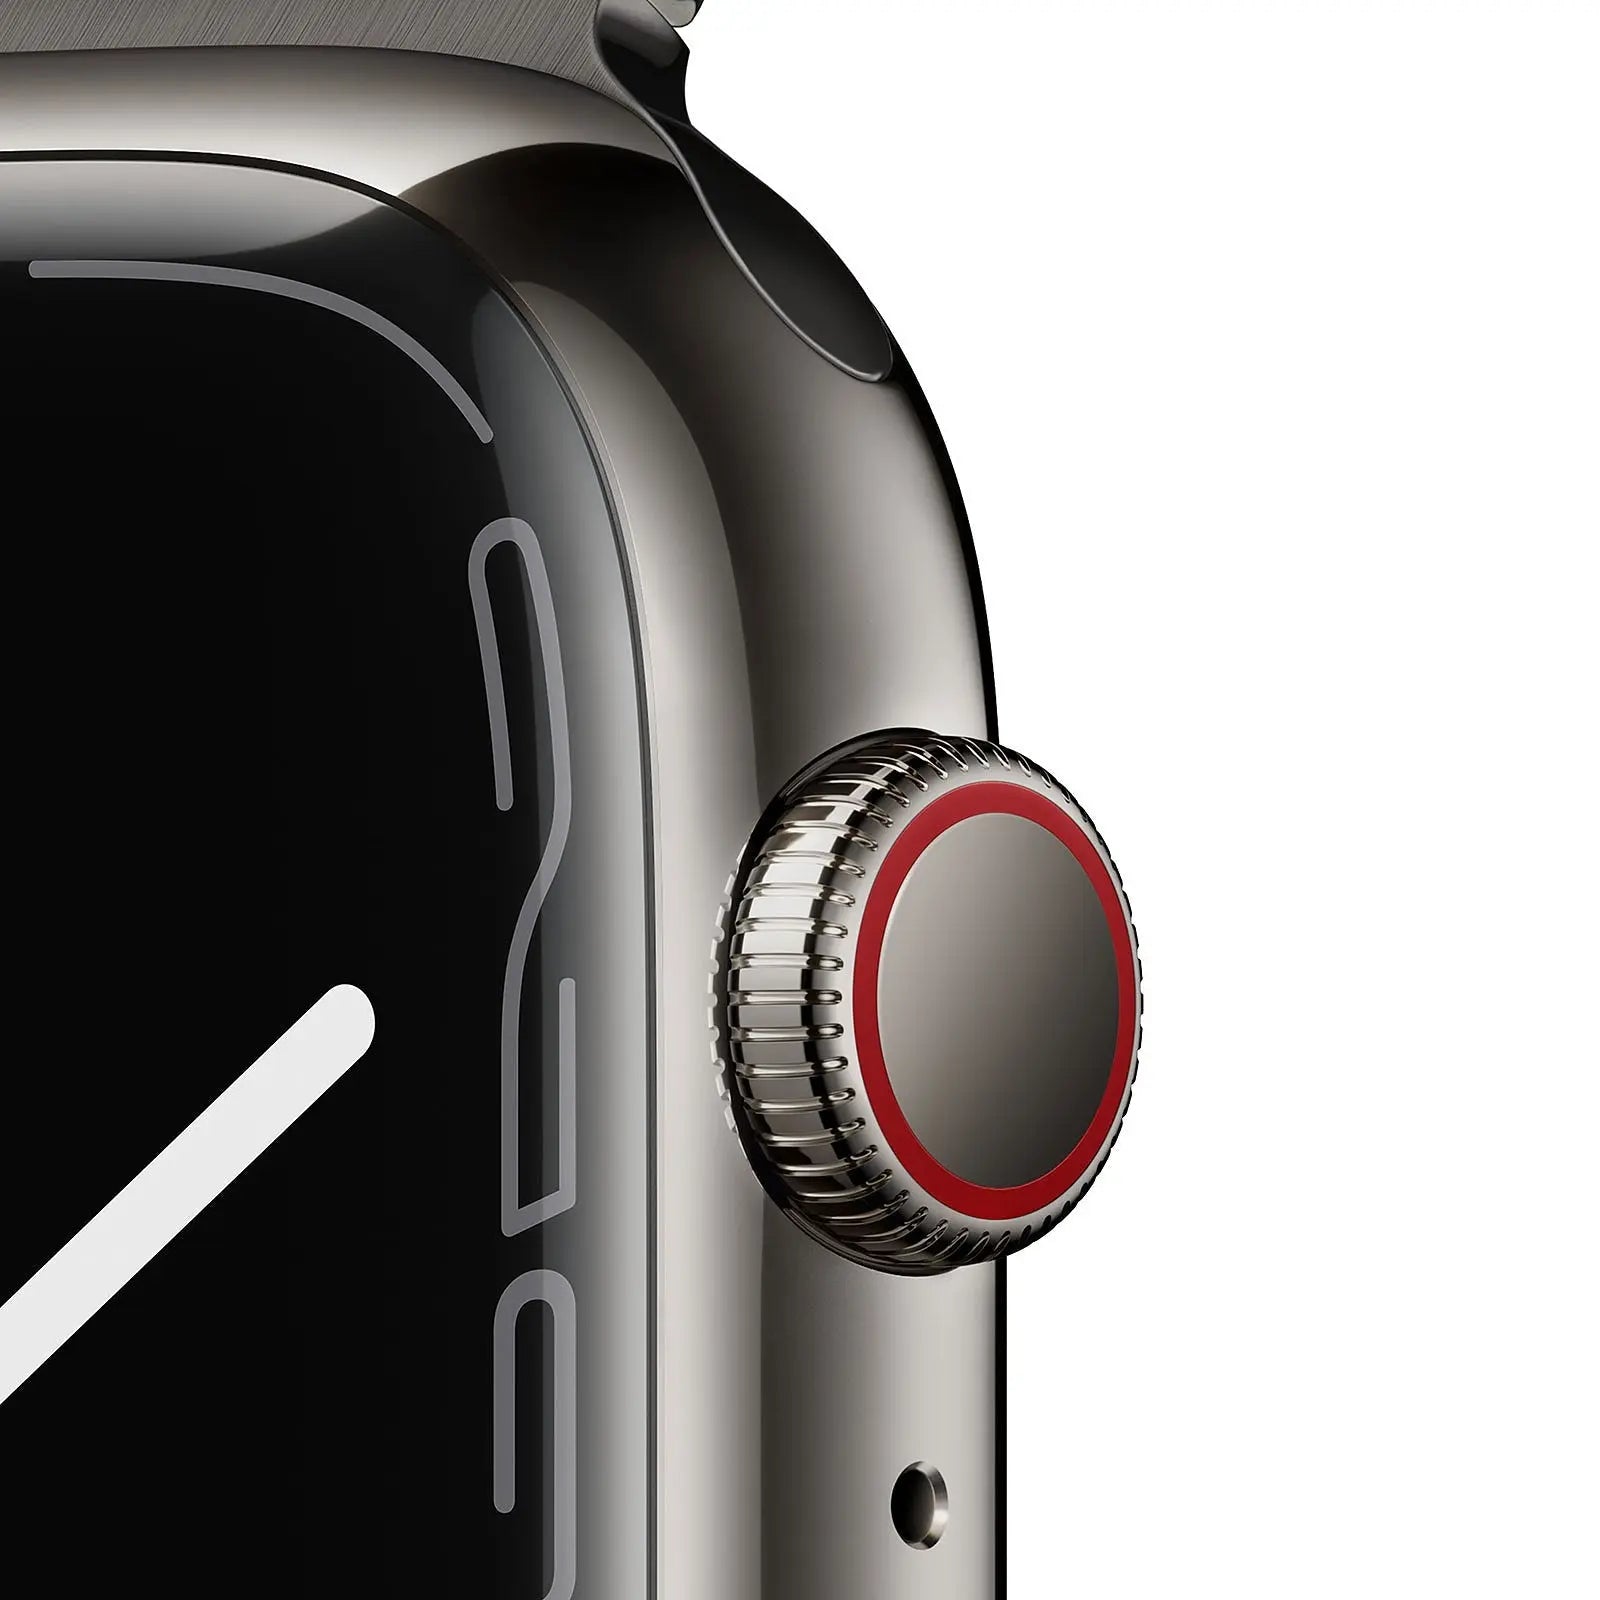 Apple Watch Series 7 GPS + Cellular Stainless Graphite Bracelet Milanese 45 mm 0194252574836 APPLE